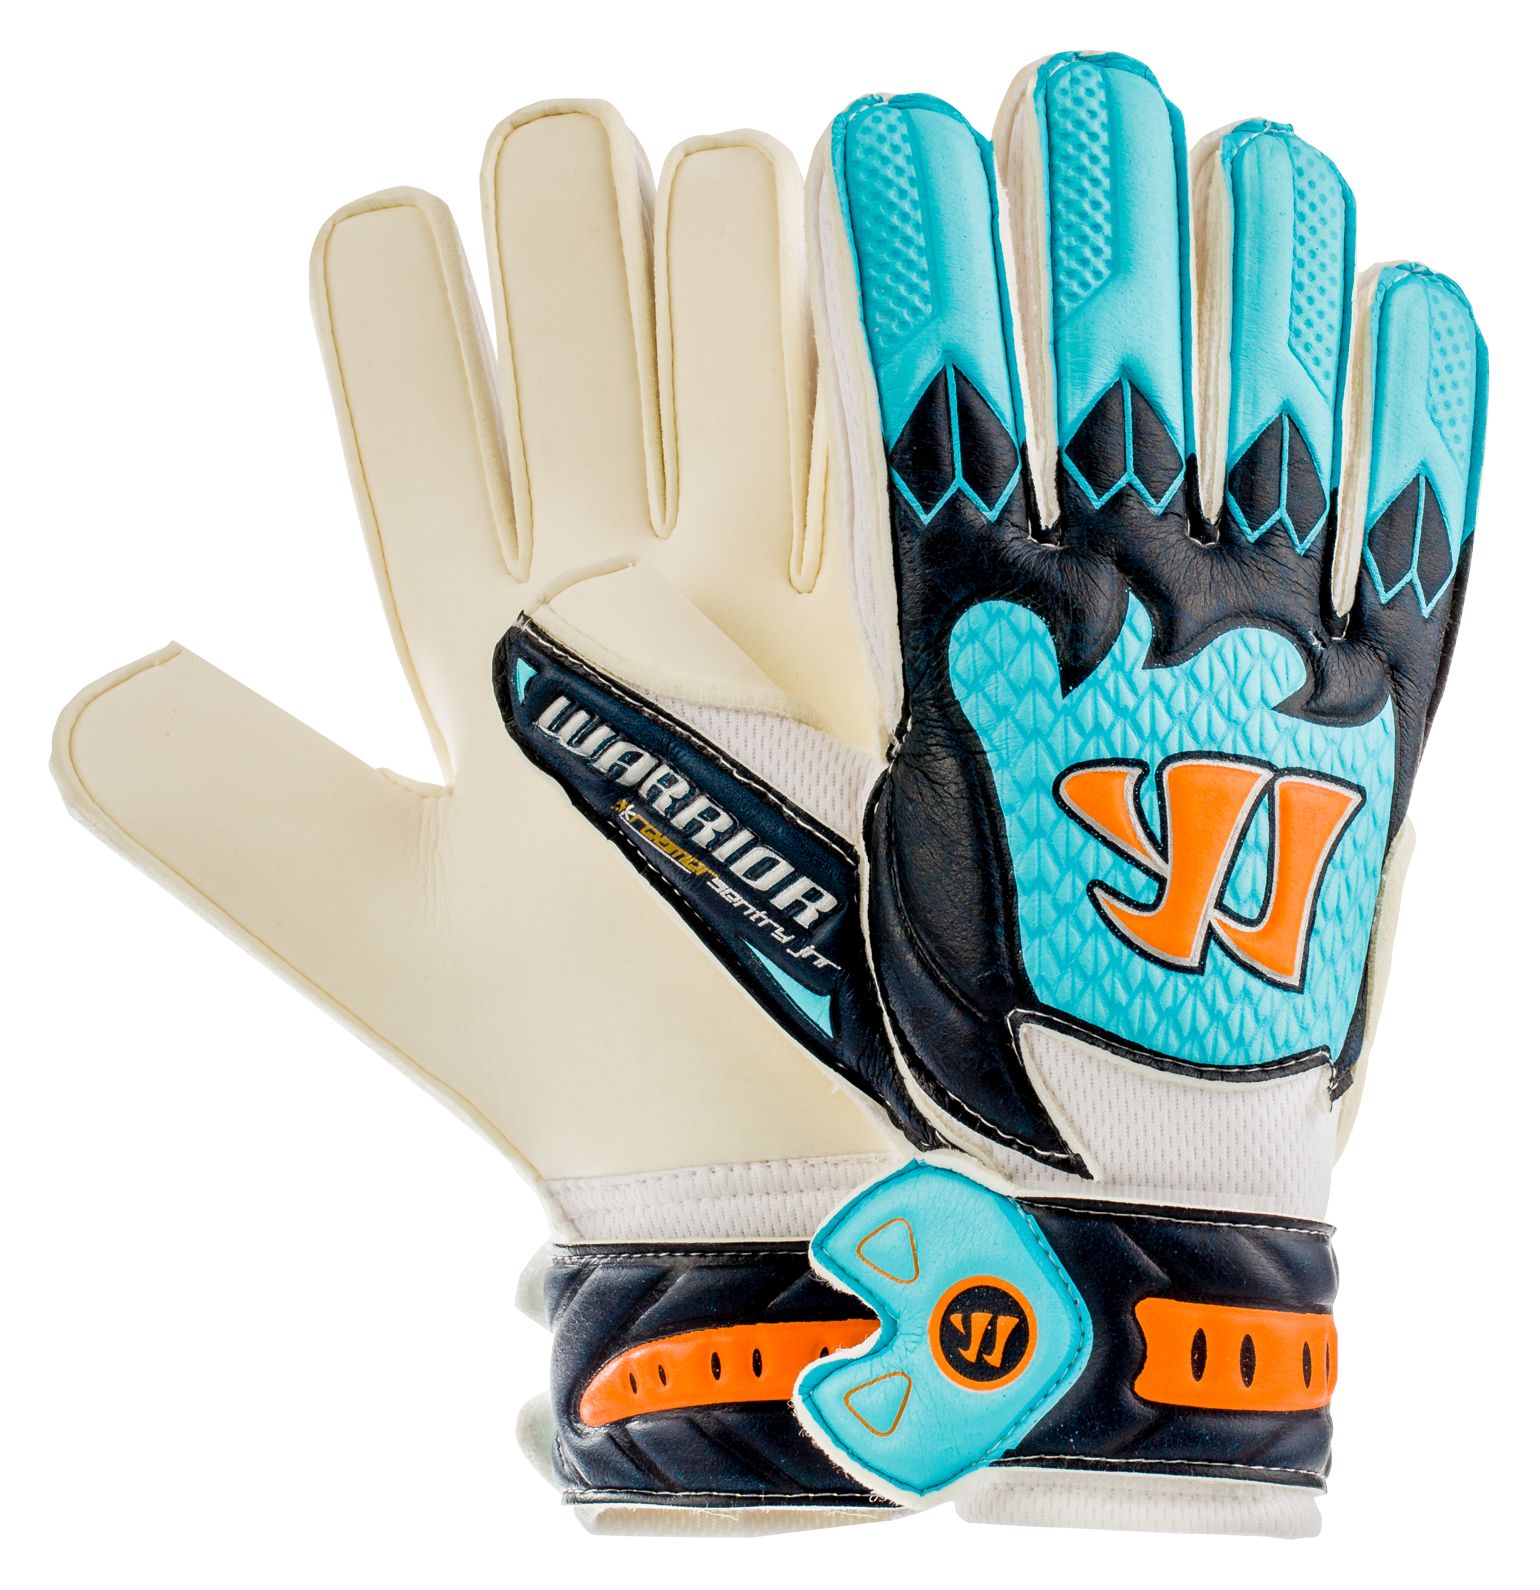 Skreamer Sentry Junior Goalkeeper Gloves, White with Blue Radiance & Insignia Blue image number 0